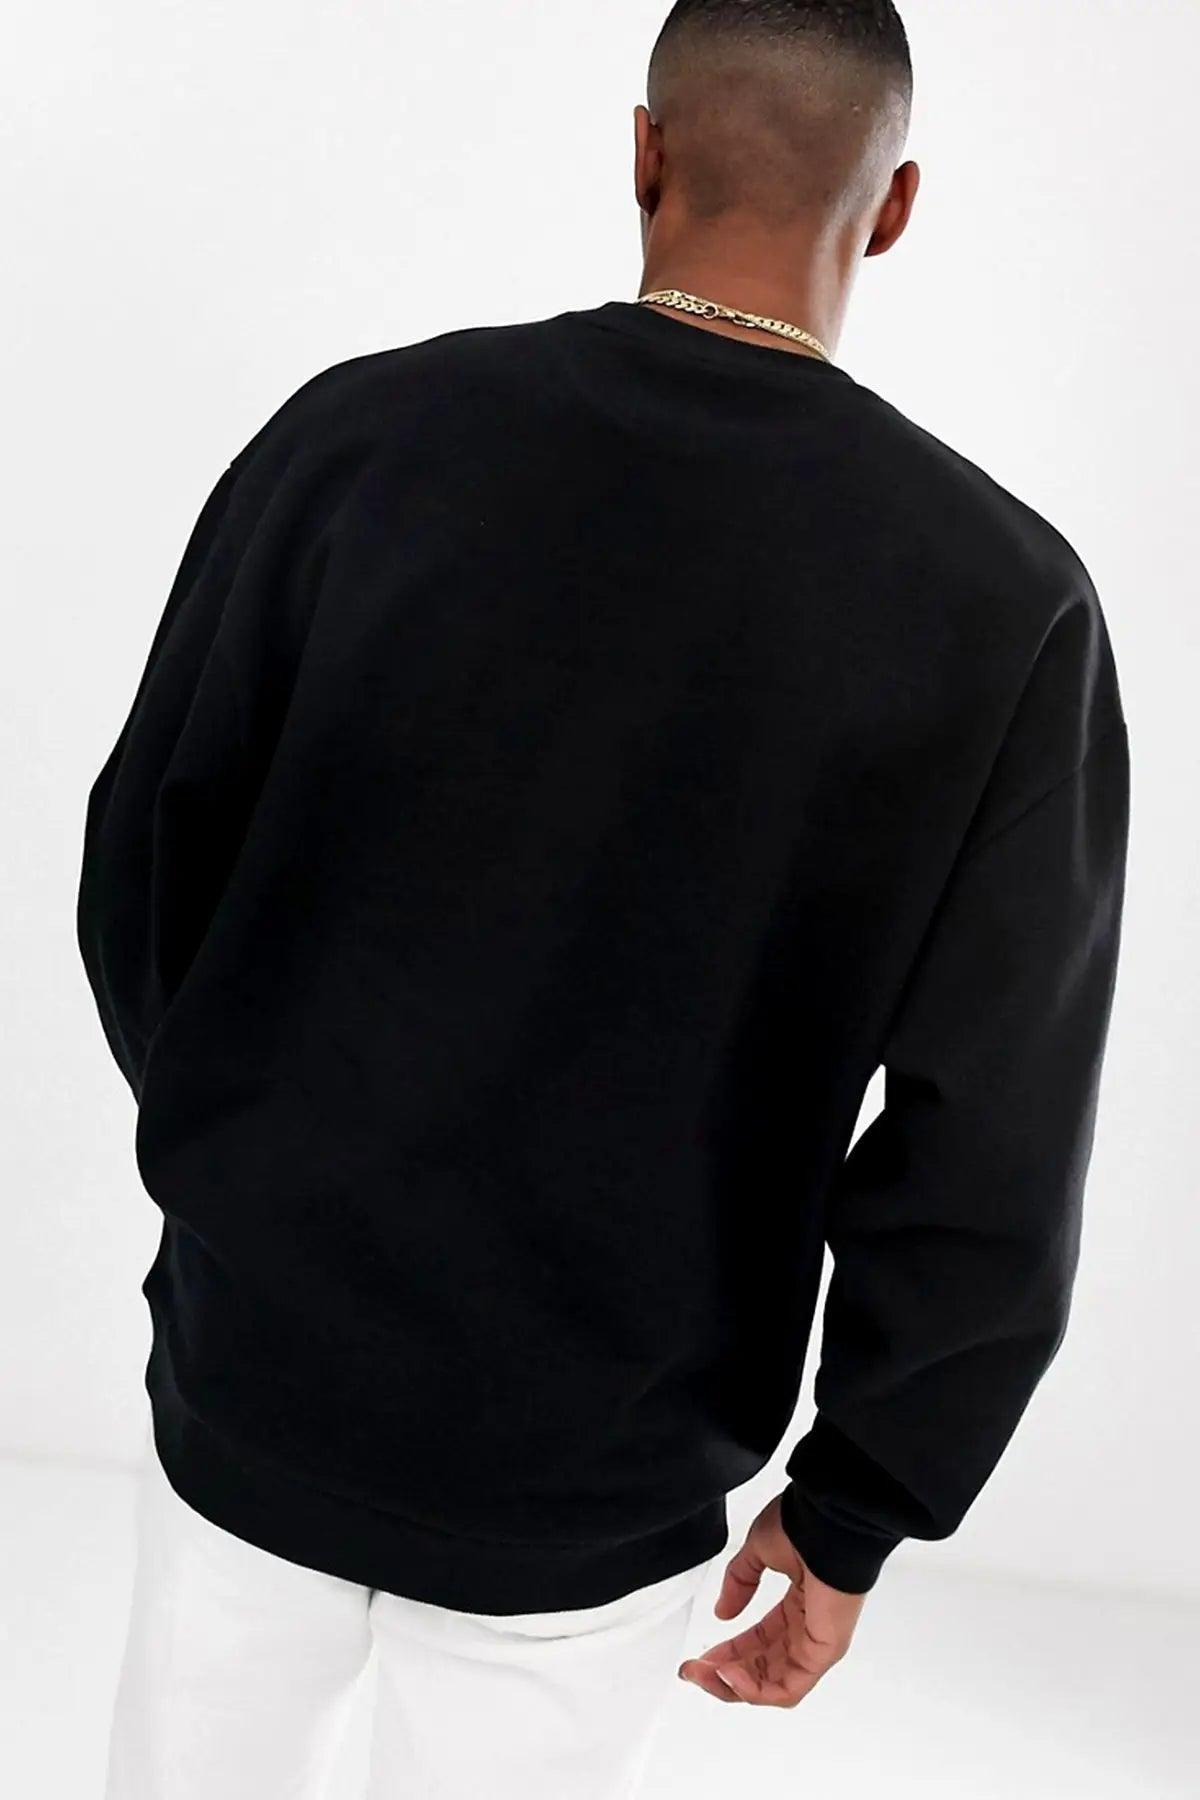 Realistic Oversize Erkek Sweatshirt - PΛSΛGE